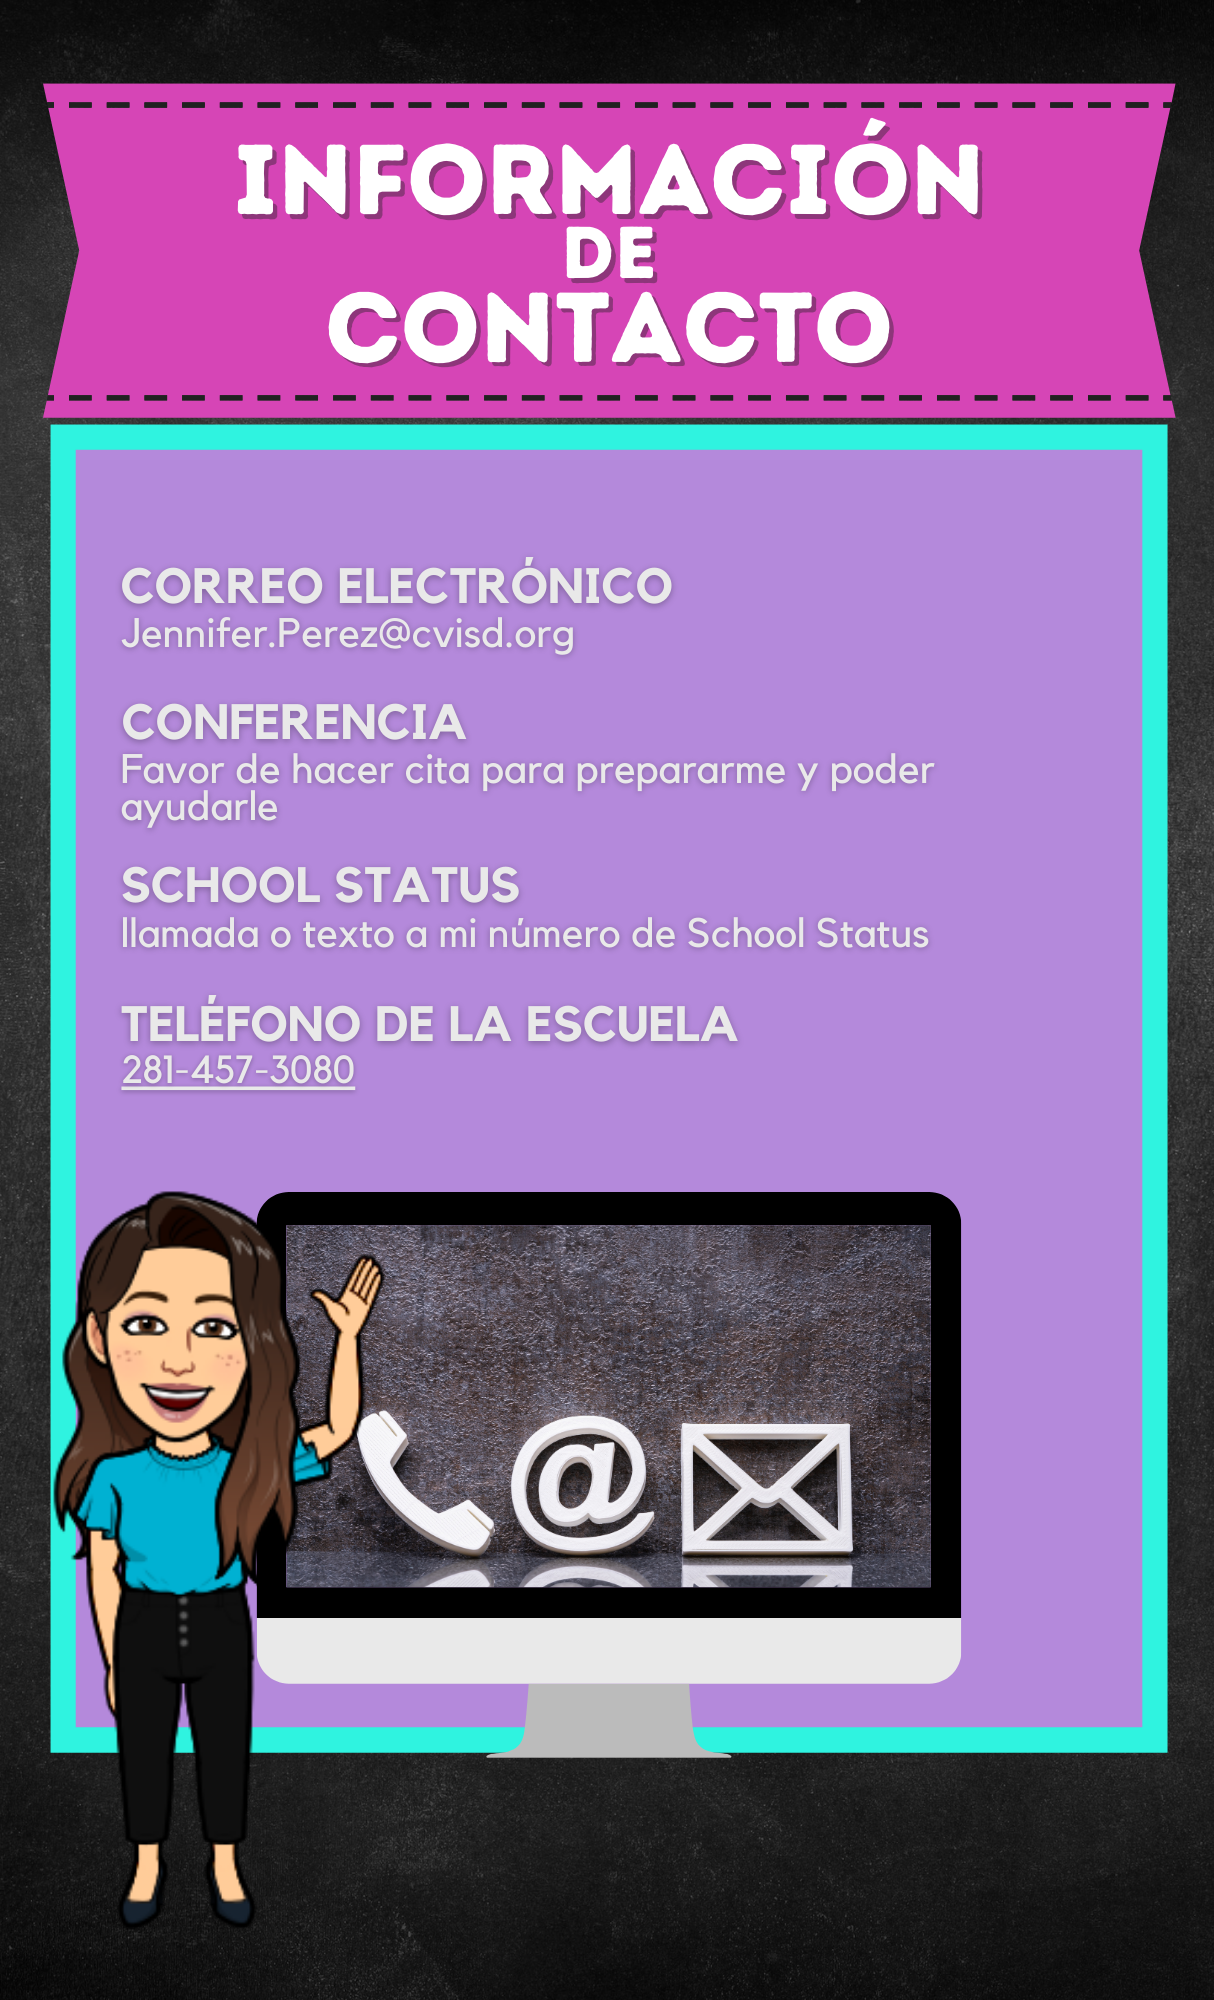 teacher communication information